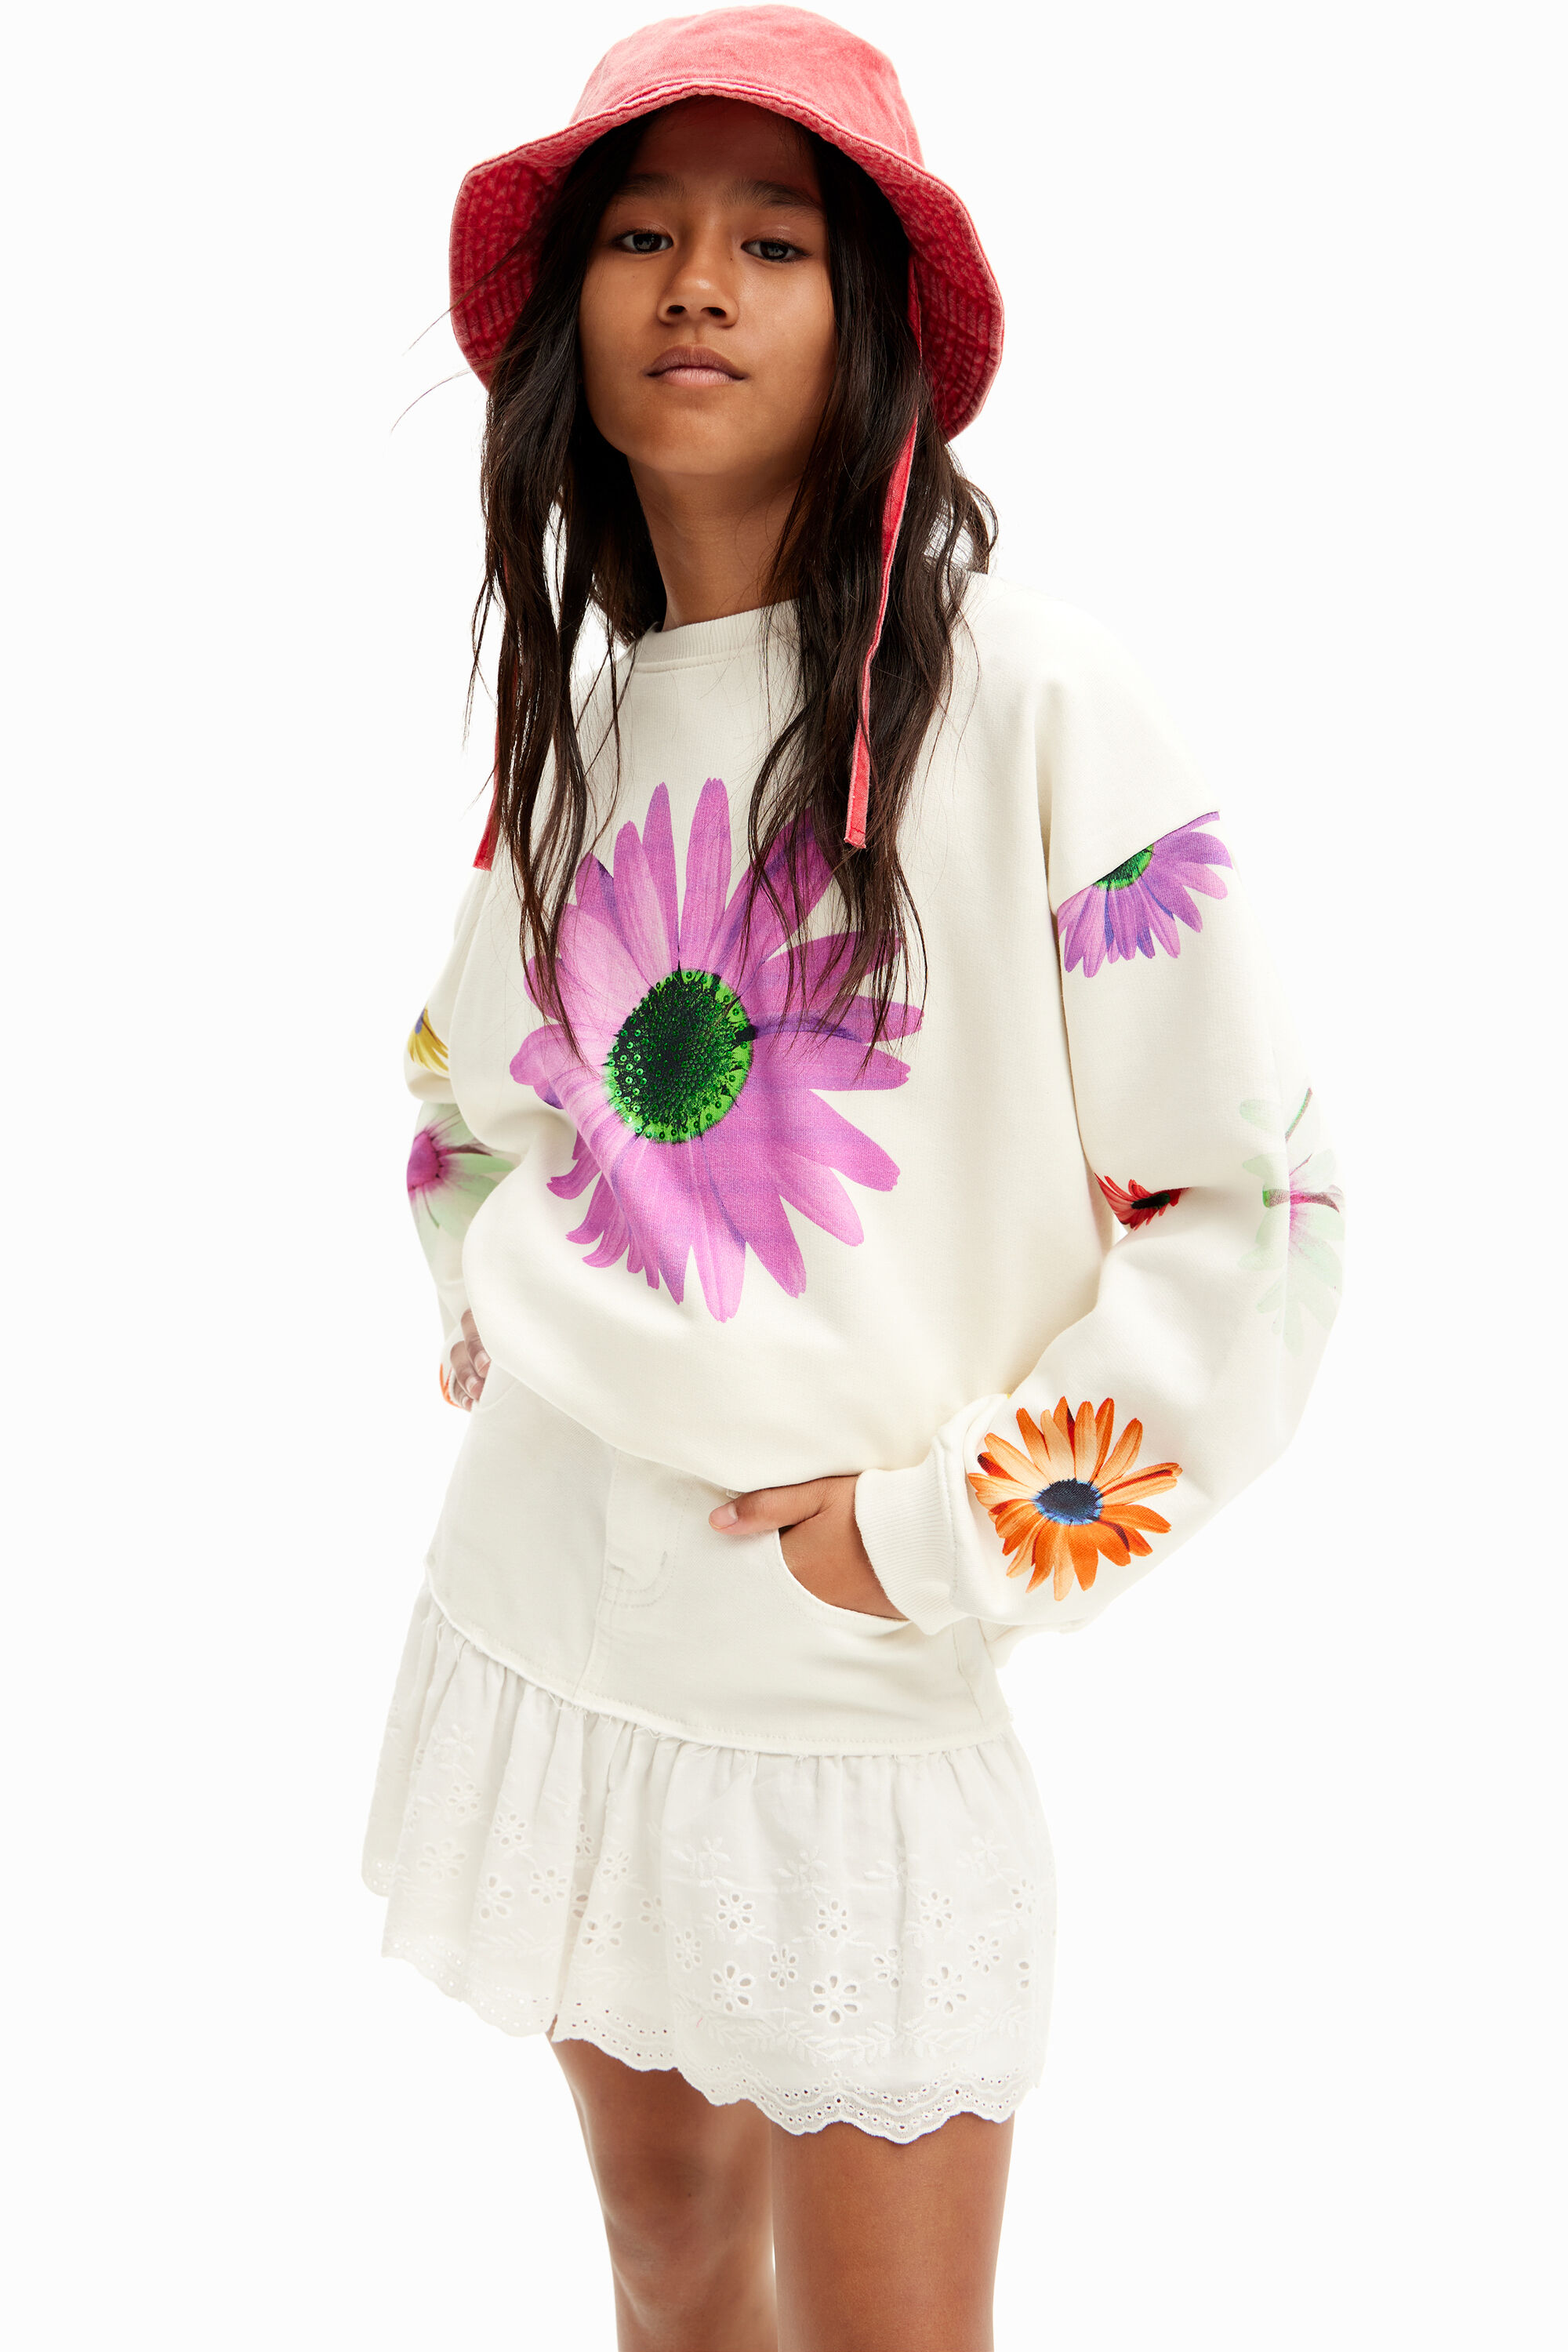 Desigual Oversize daisy sweatshirt